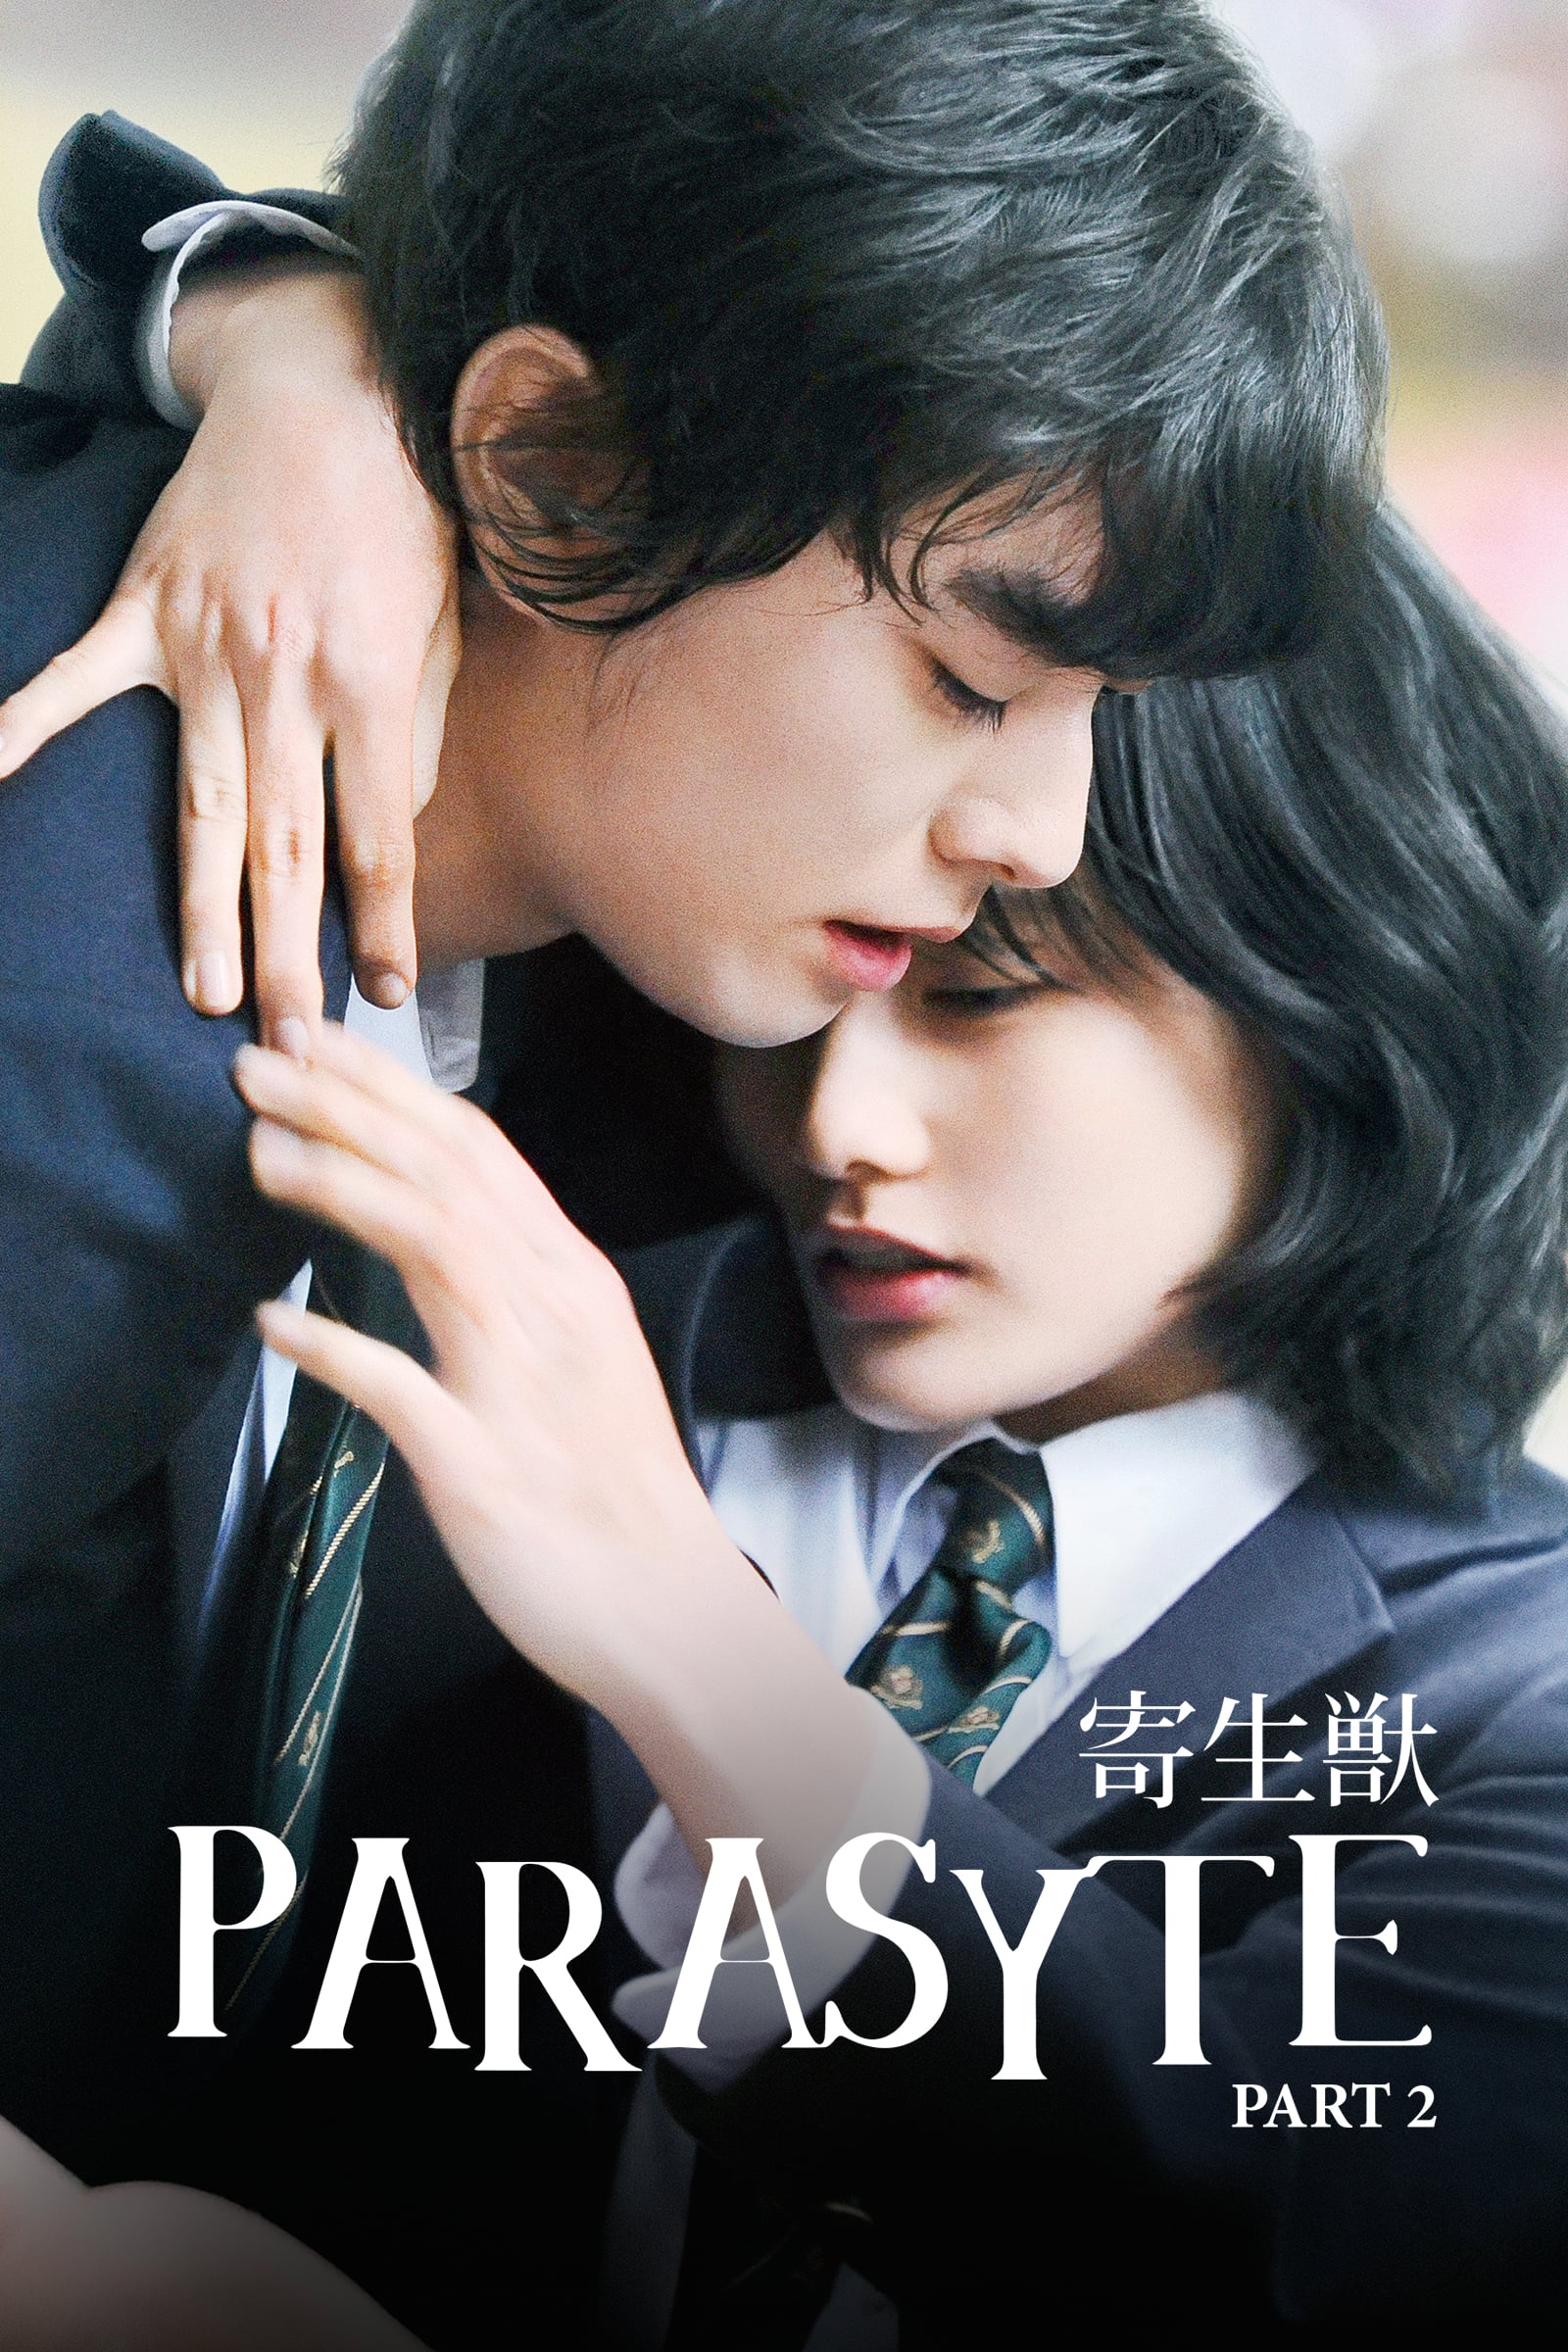 Download parasyte part 2 full movie sub indo